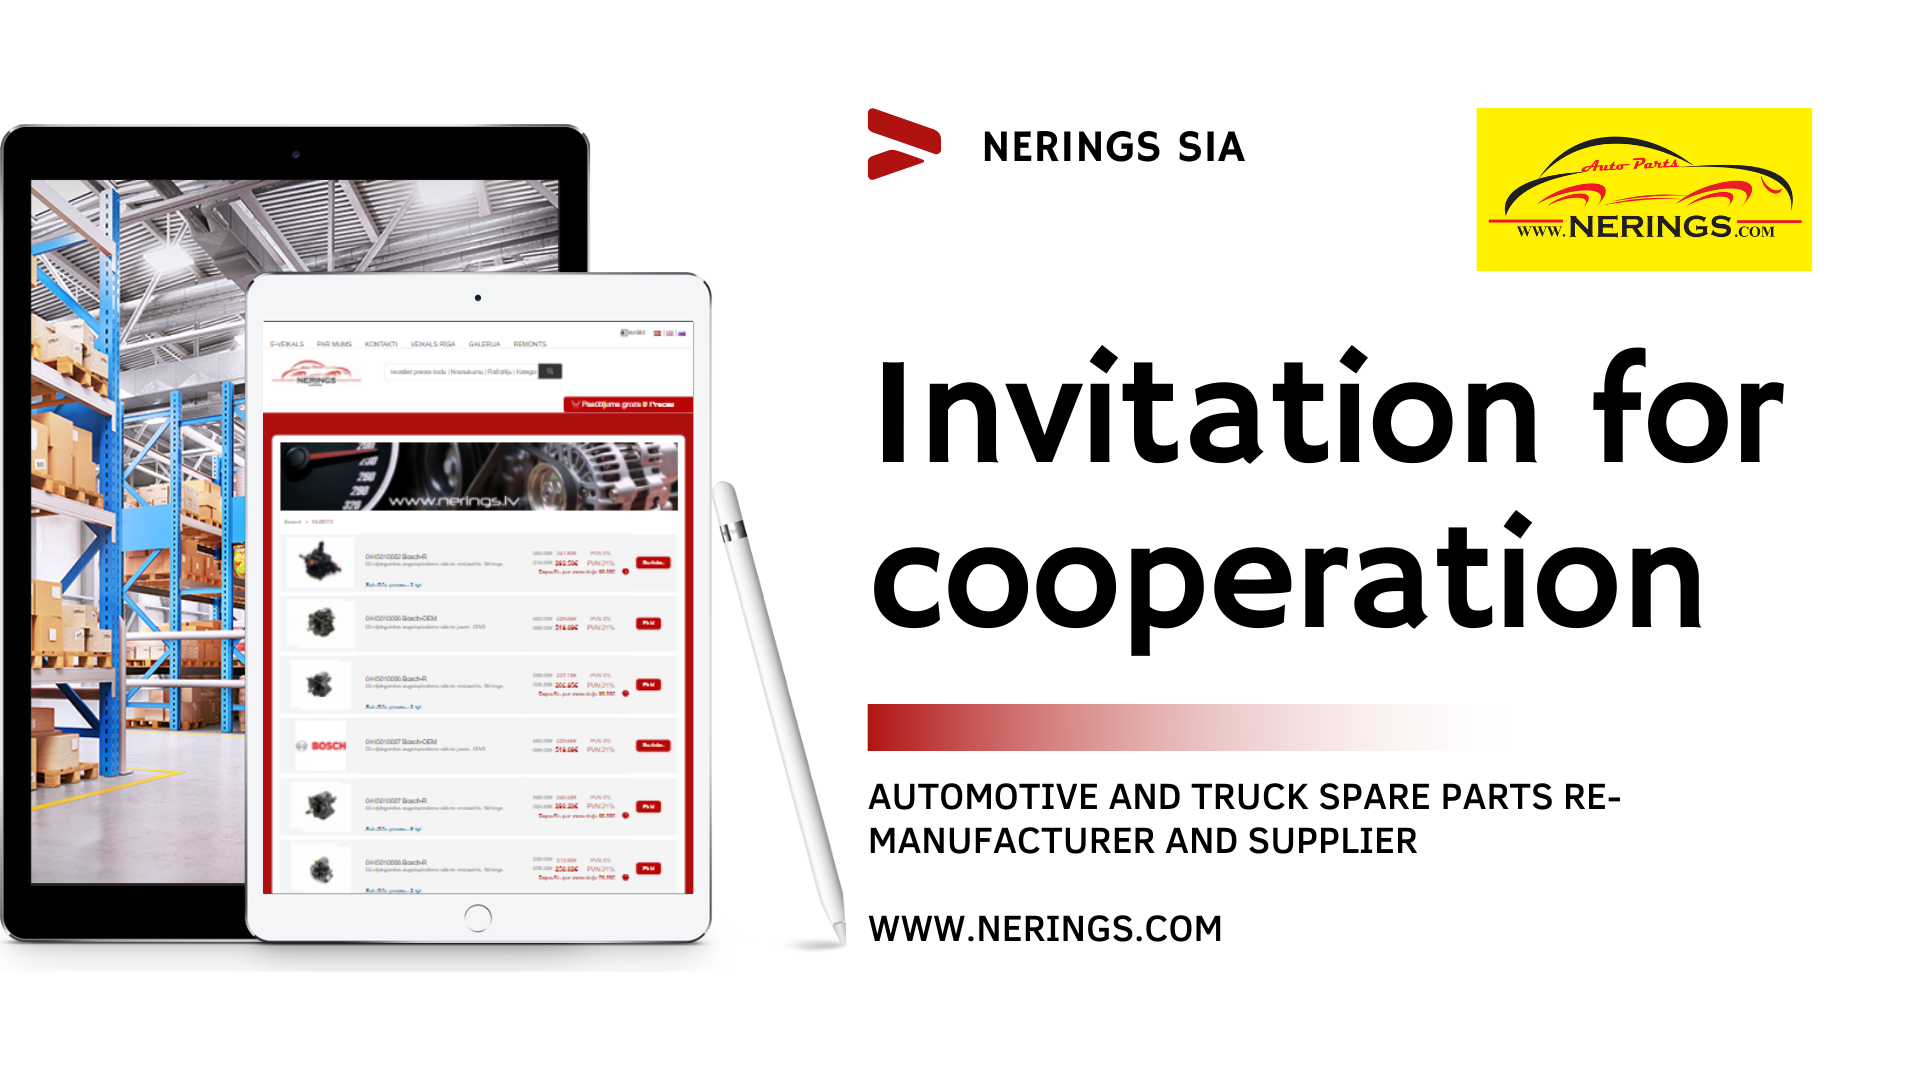 Inivtation for cooperation Nerings sia